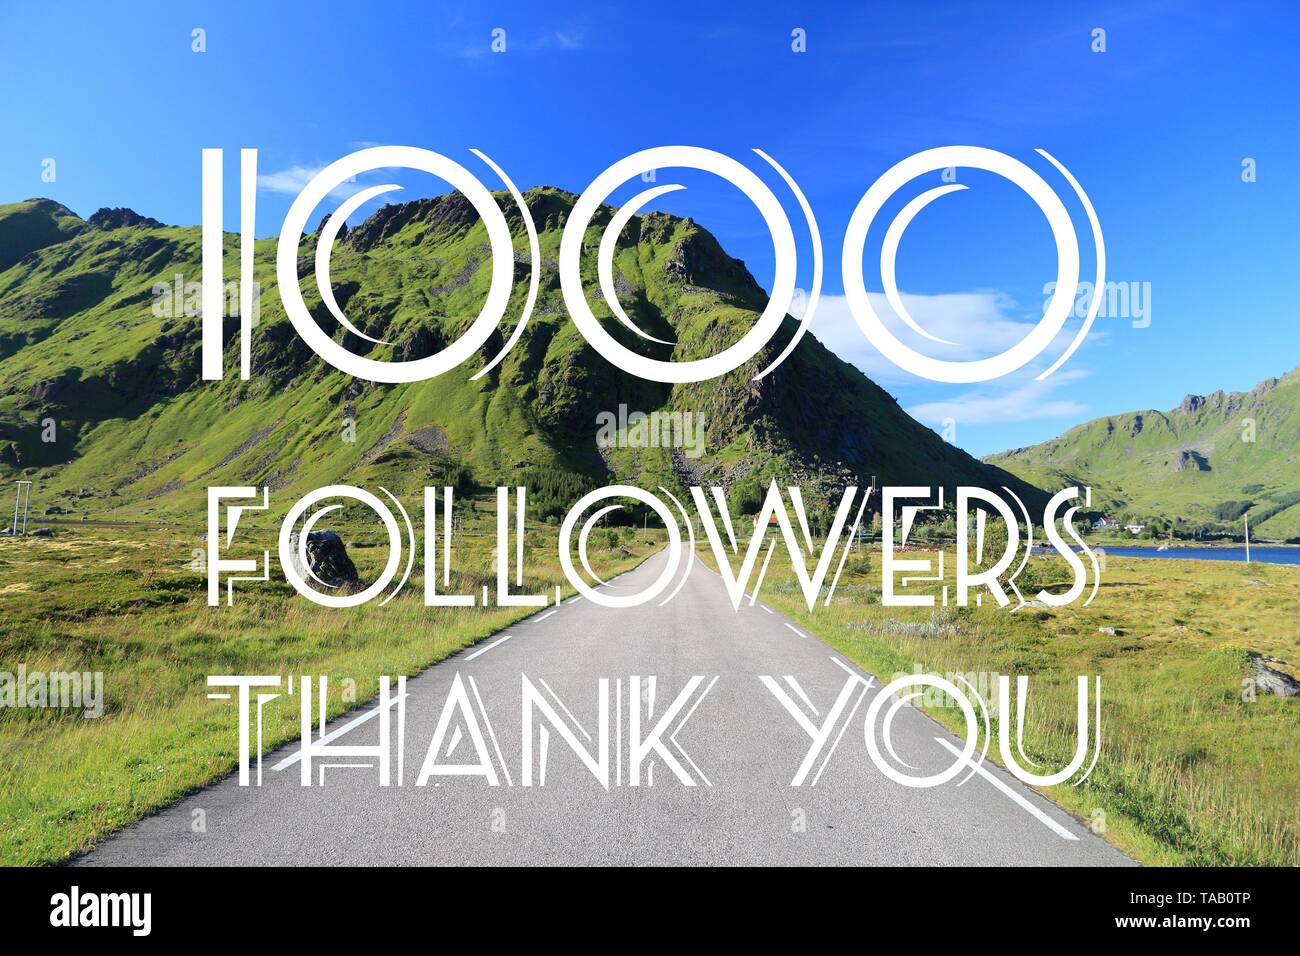 1000 followers - social media milestone banner. Online community thank you note. 1000 likes. Stock Photo